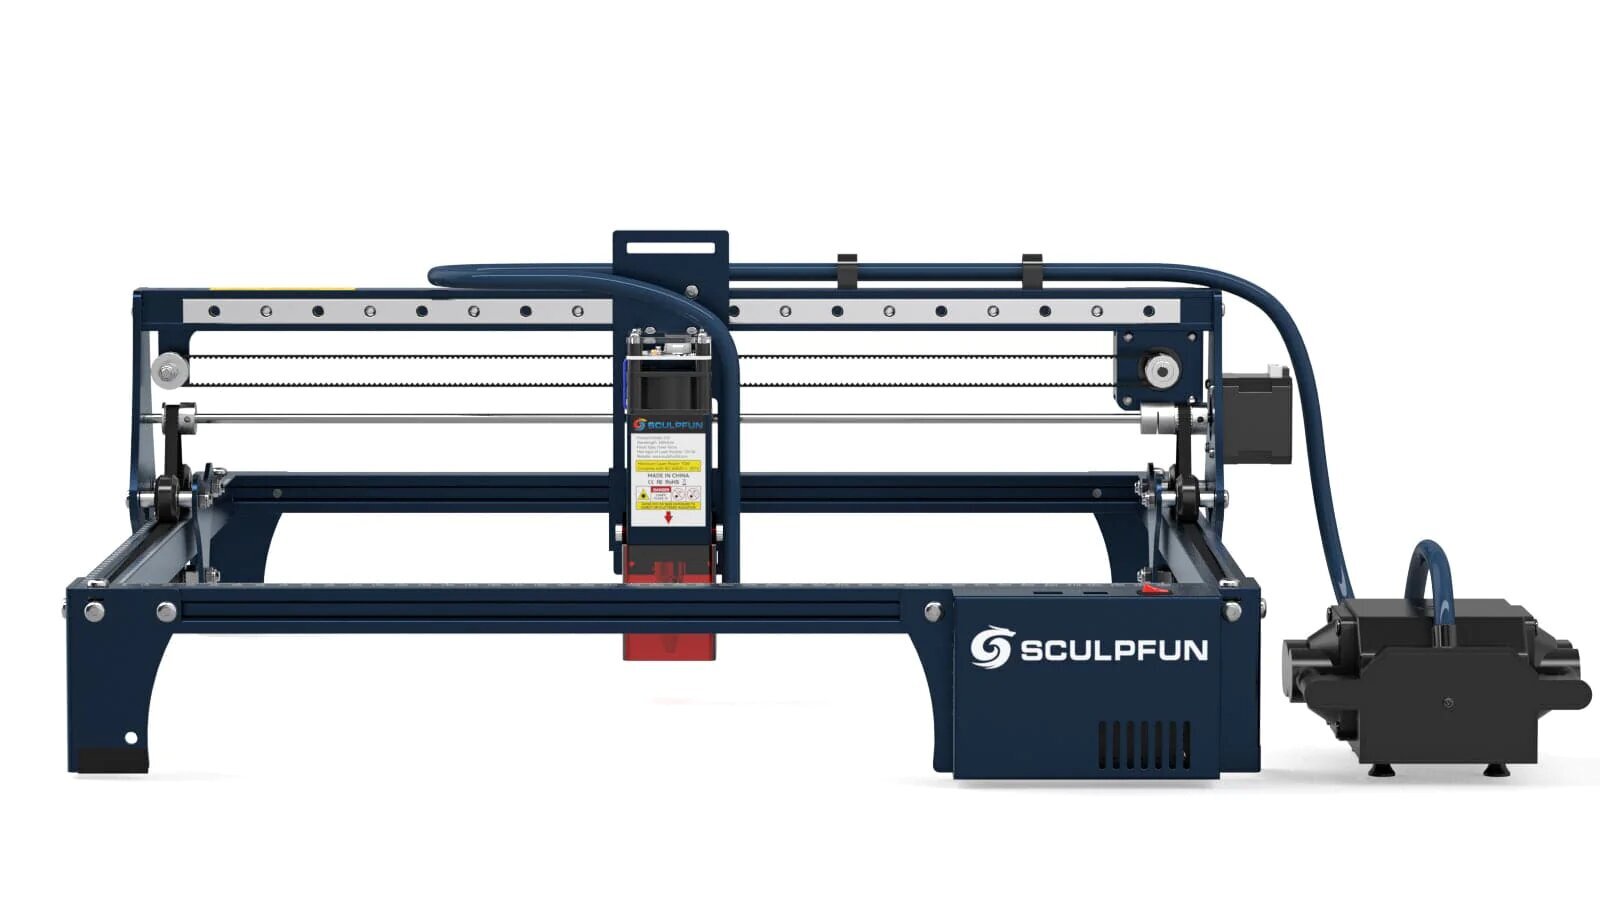 Our NEW Laser Cutting & Engraving Machine - Sculpfun S30 PRO (10W) 